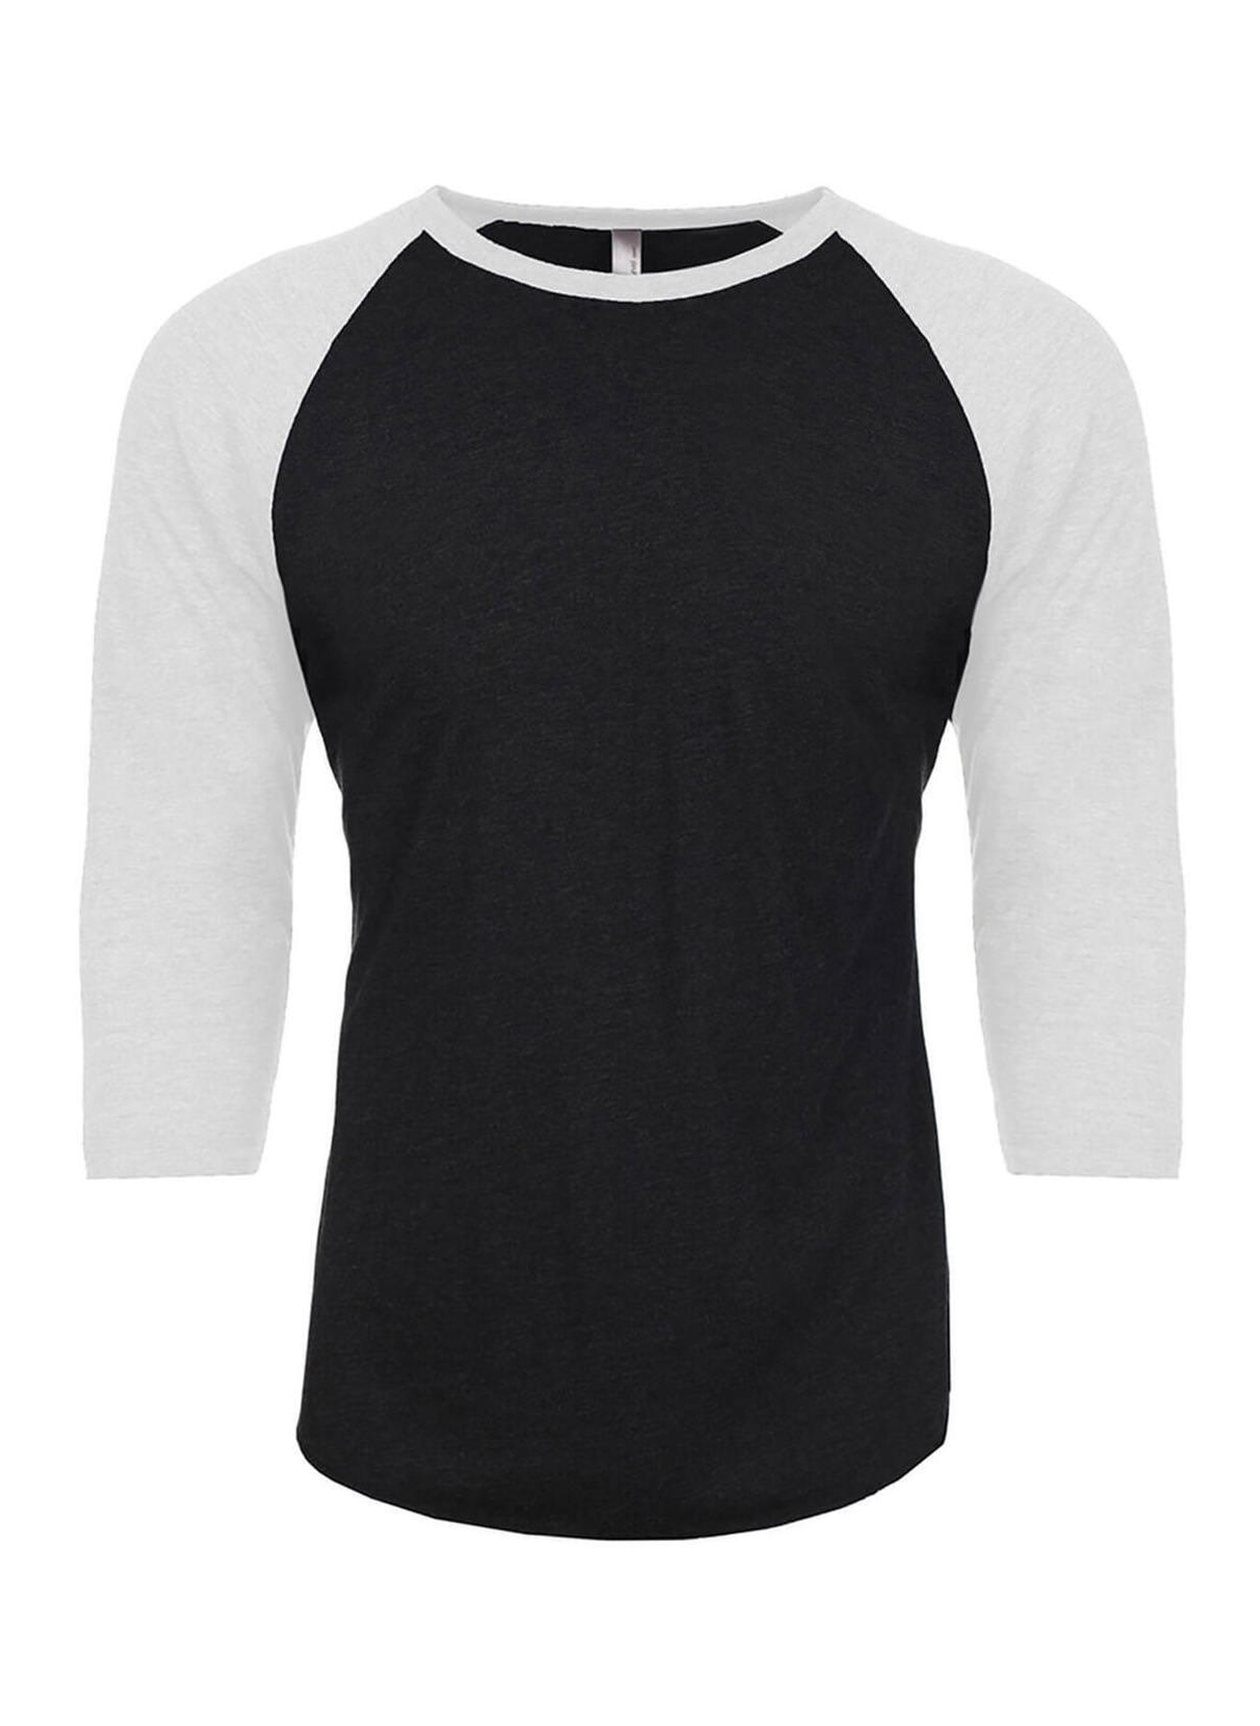 Next Level Men's Heather White / Vintage Black Unisex Triblend 3/4-Sleeve Raglan T-Shirt